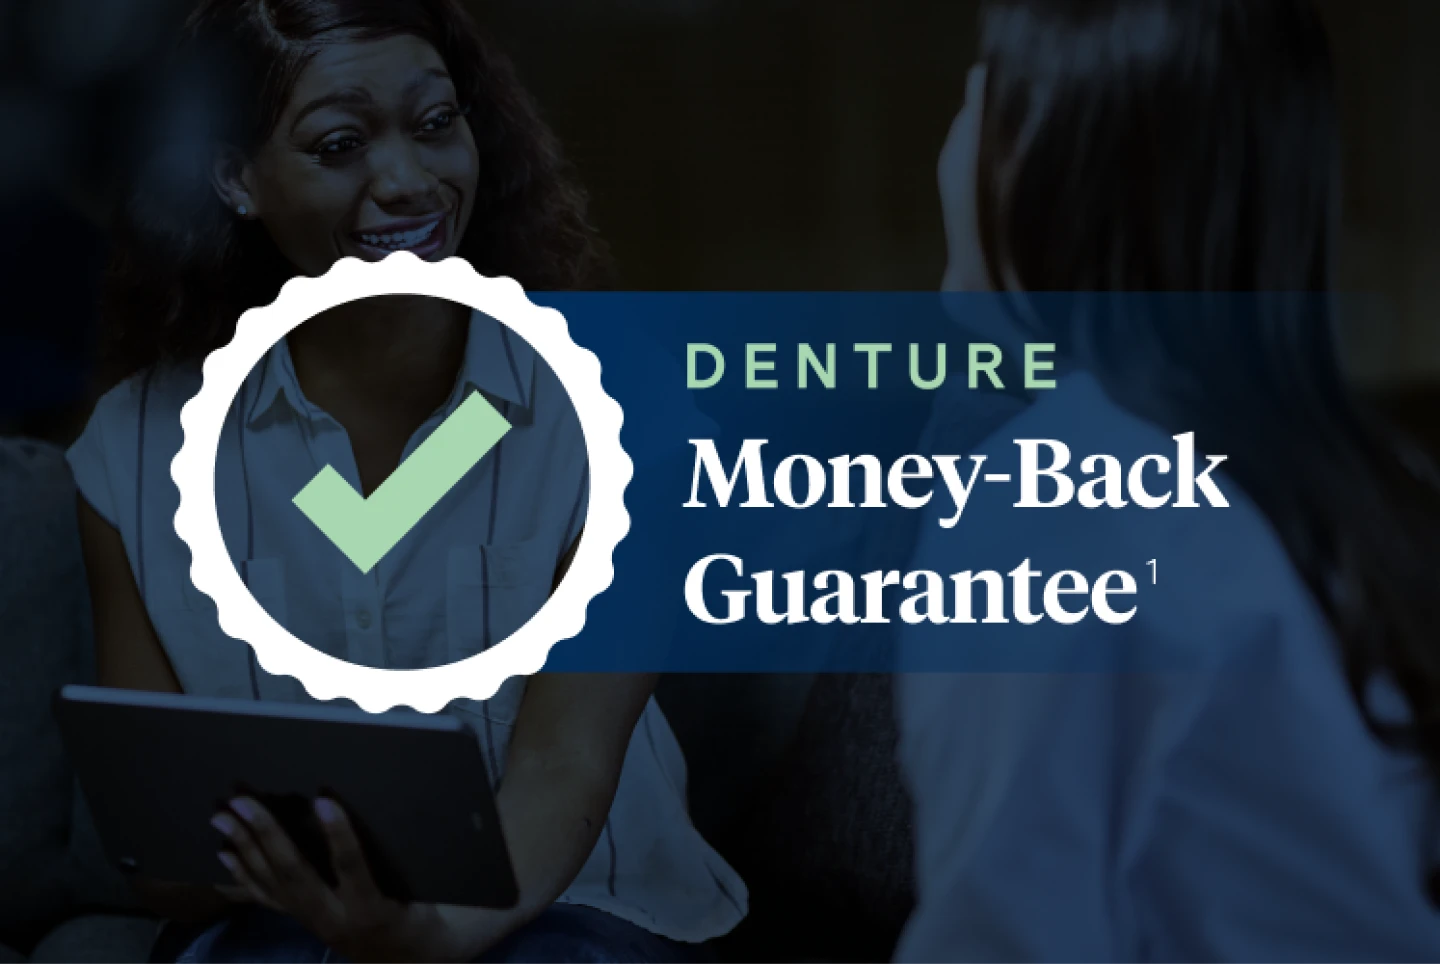 Aspen Dental Denture Money-Back Guarantee. 